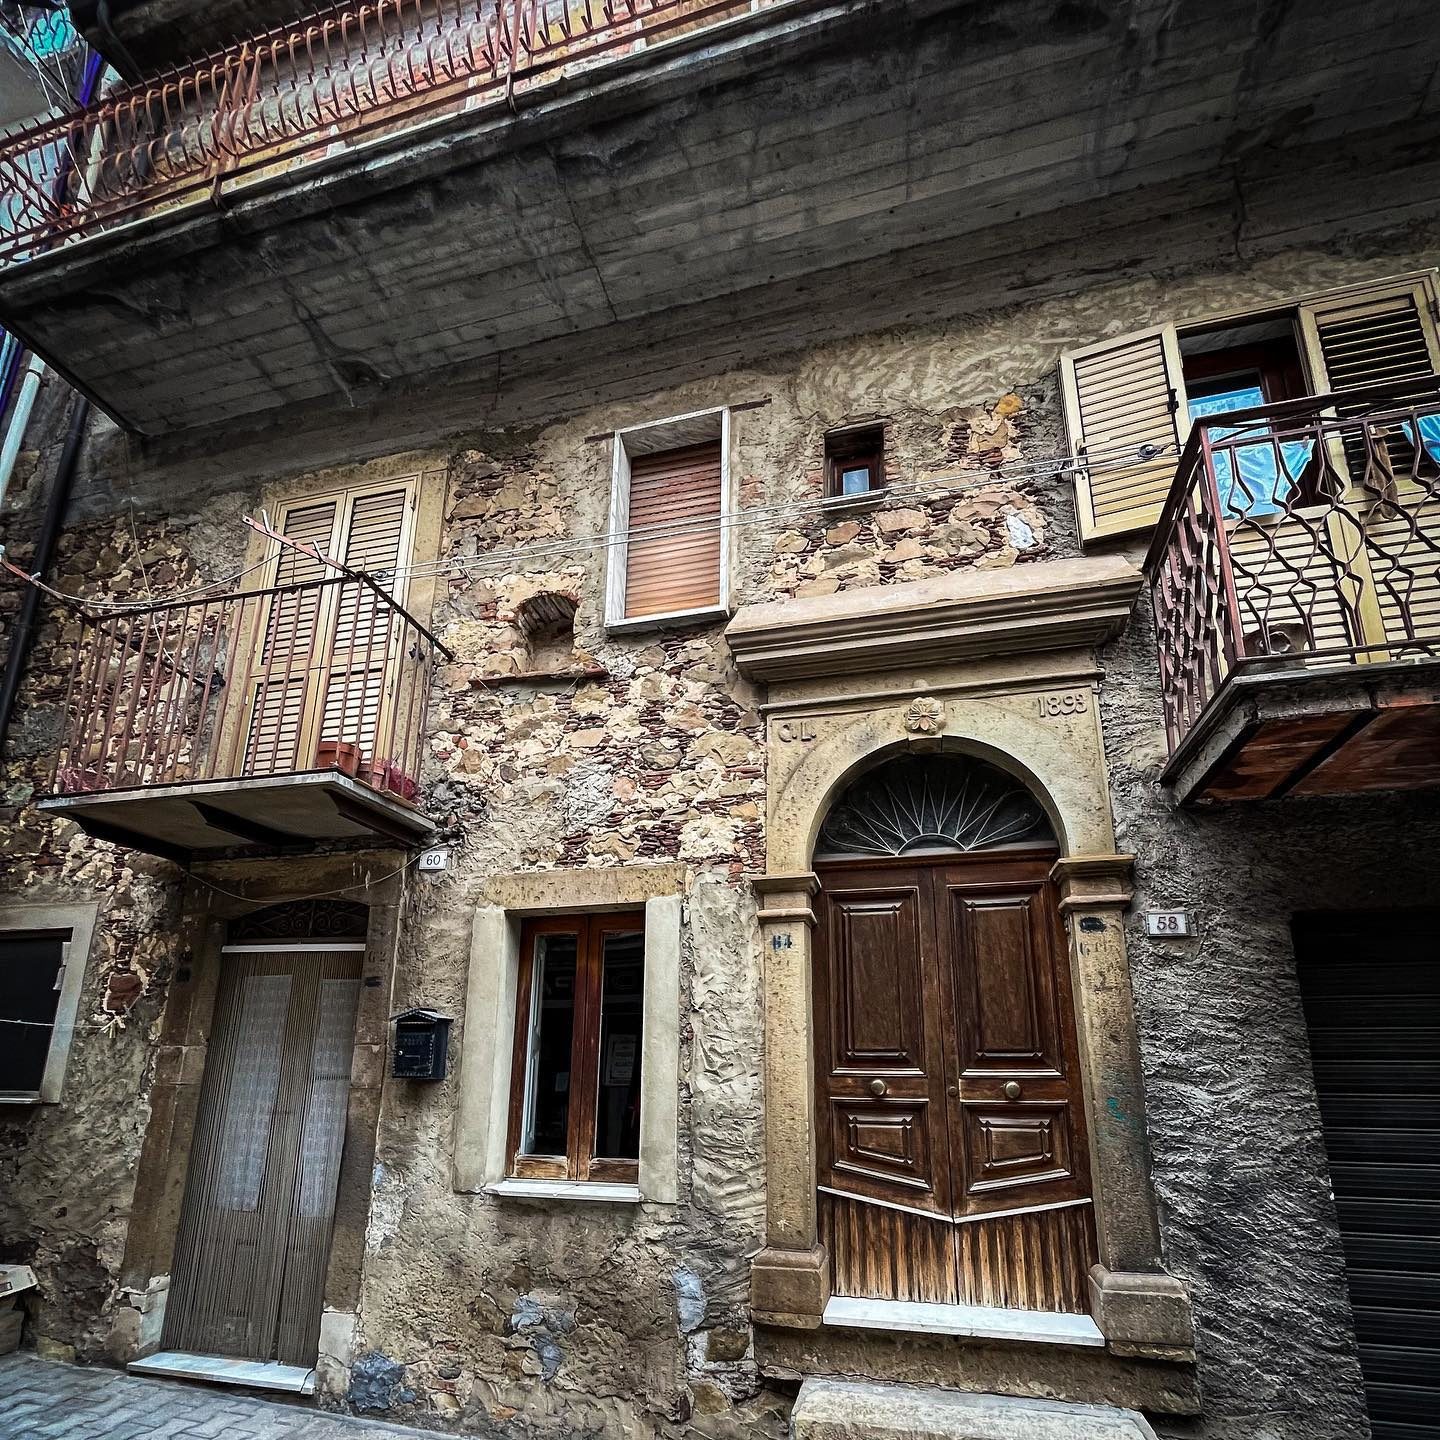 1893 Home in San Teodoro, Sicily via Instagram [Photography]